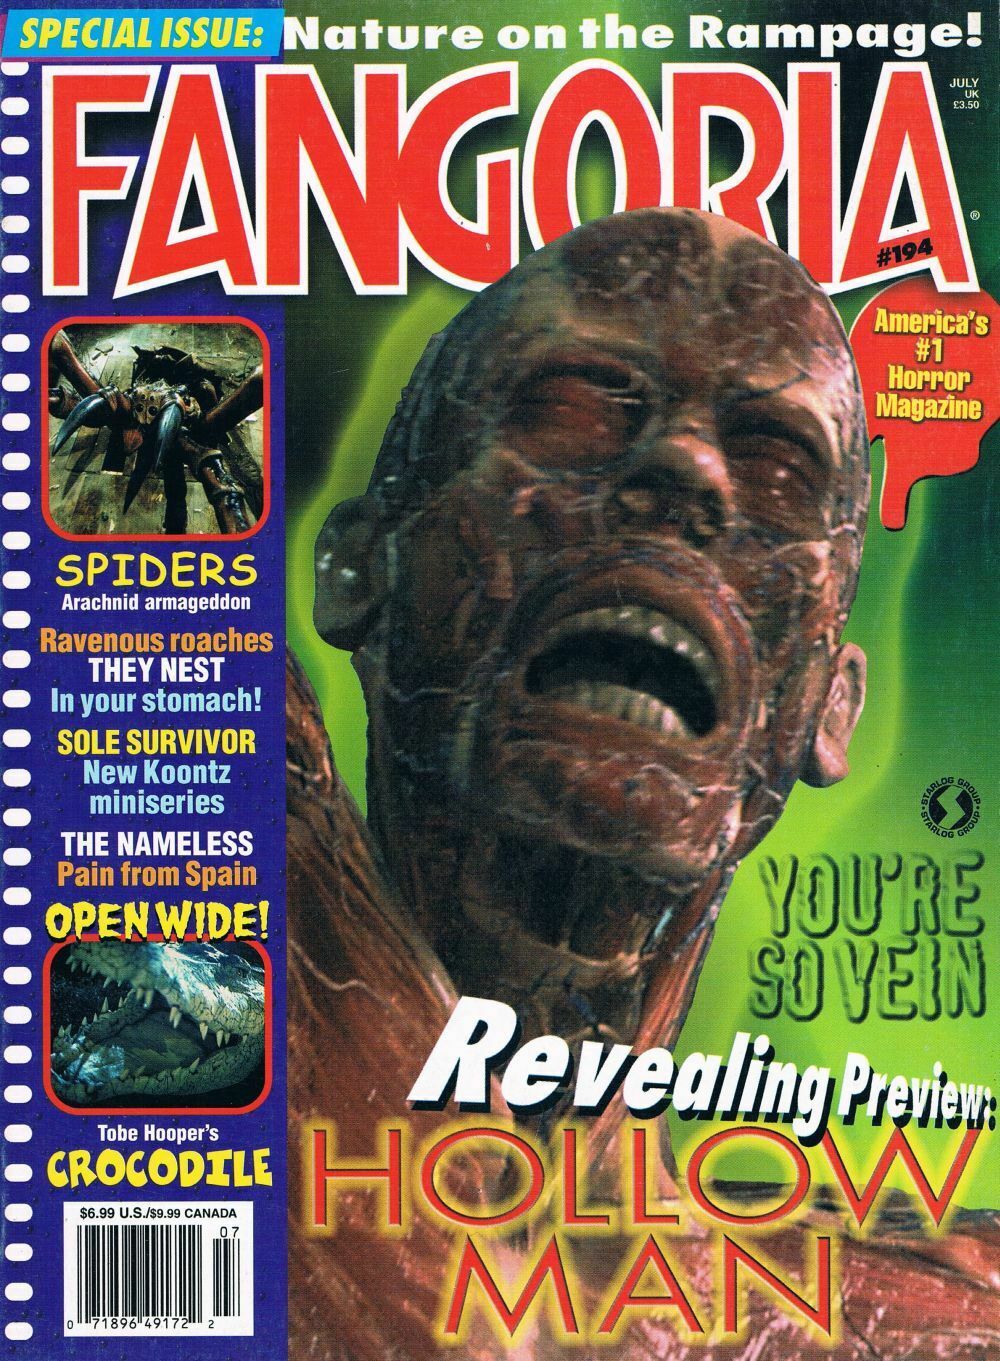 Fangoria # 194, July 2000 magazine back issue Fangoria magizine back copy 